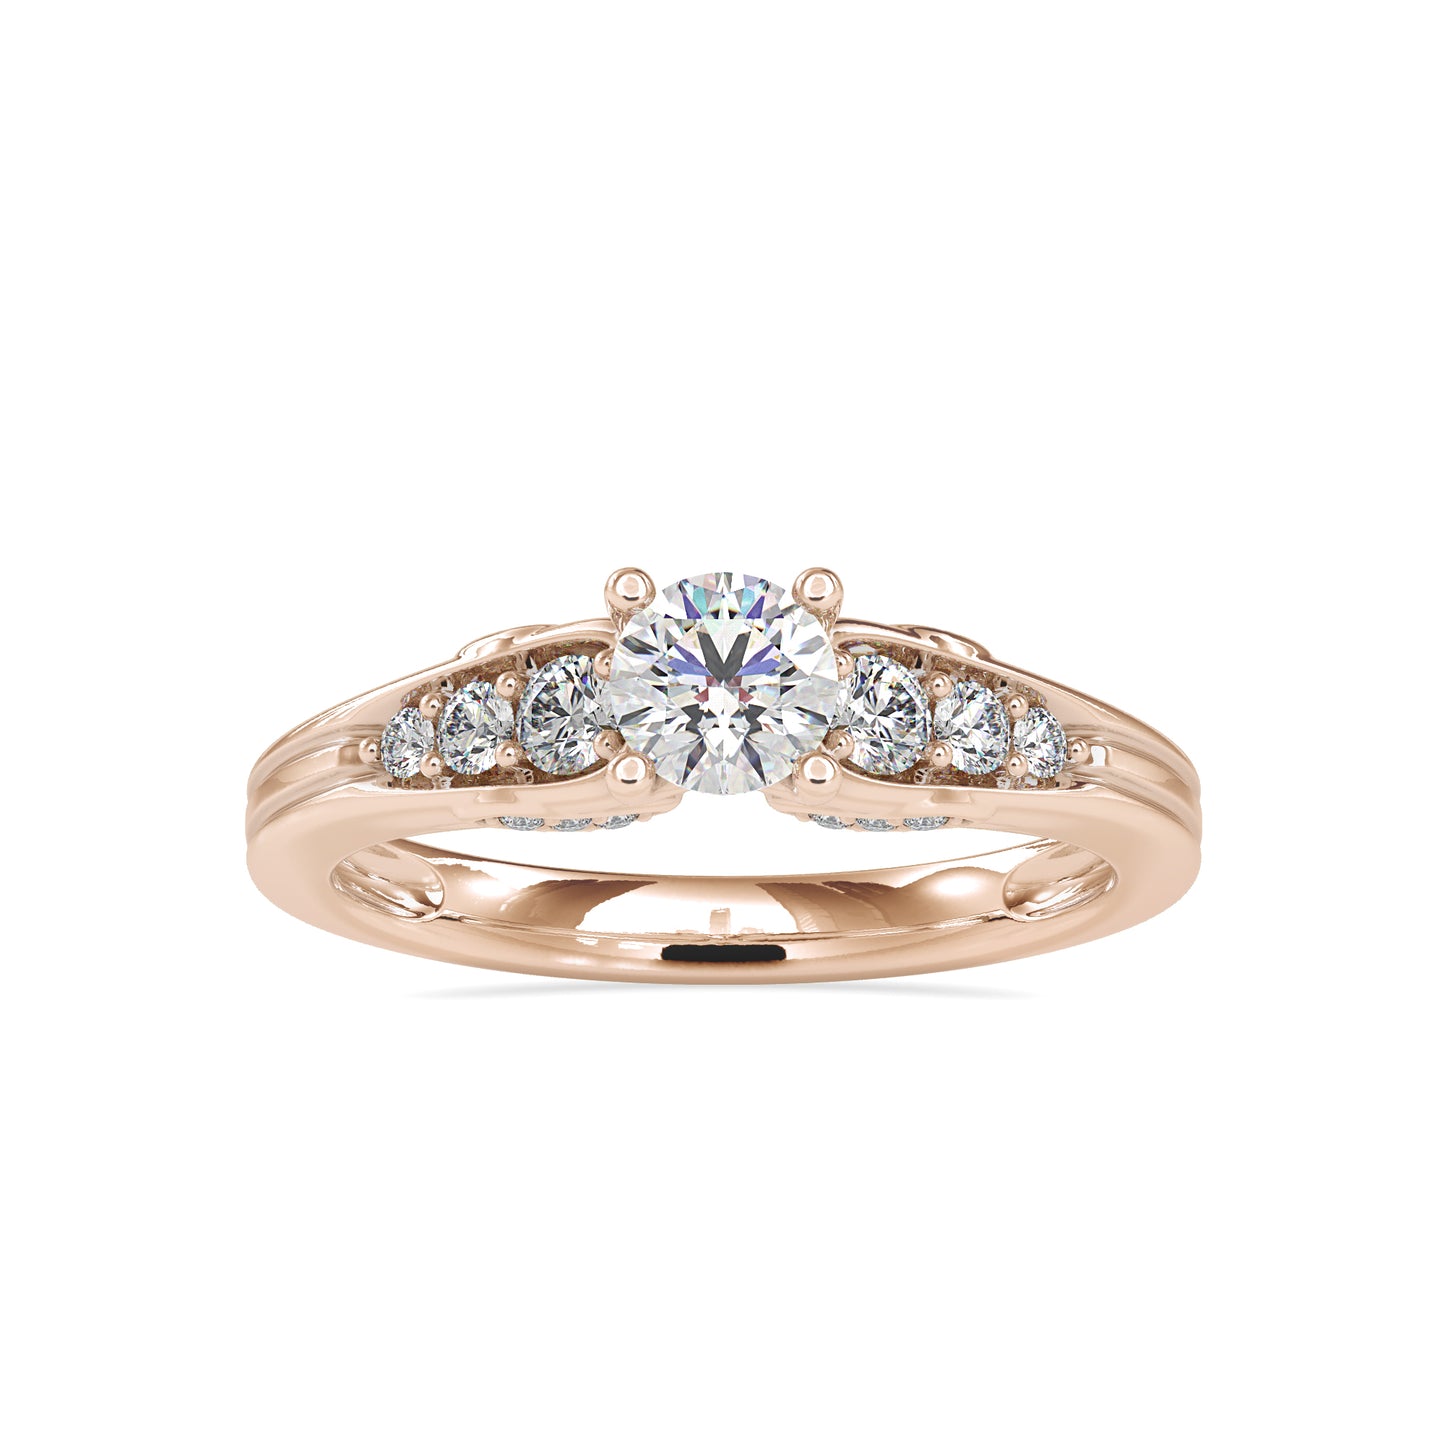 The Tara moissanite Diamond Ring